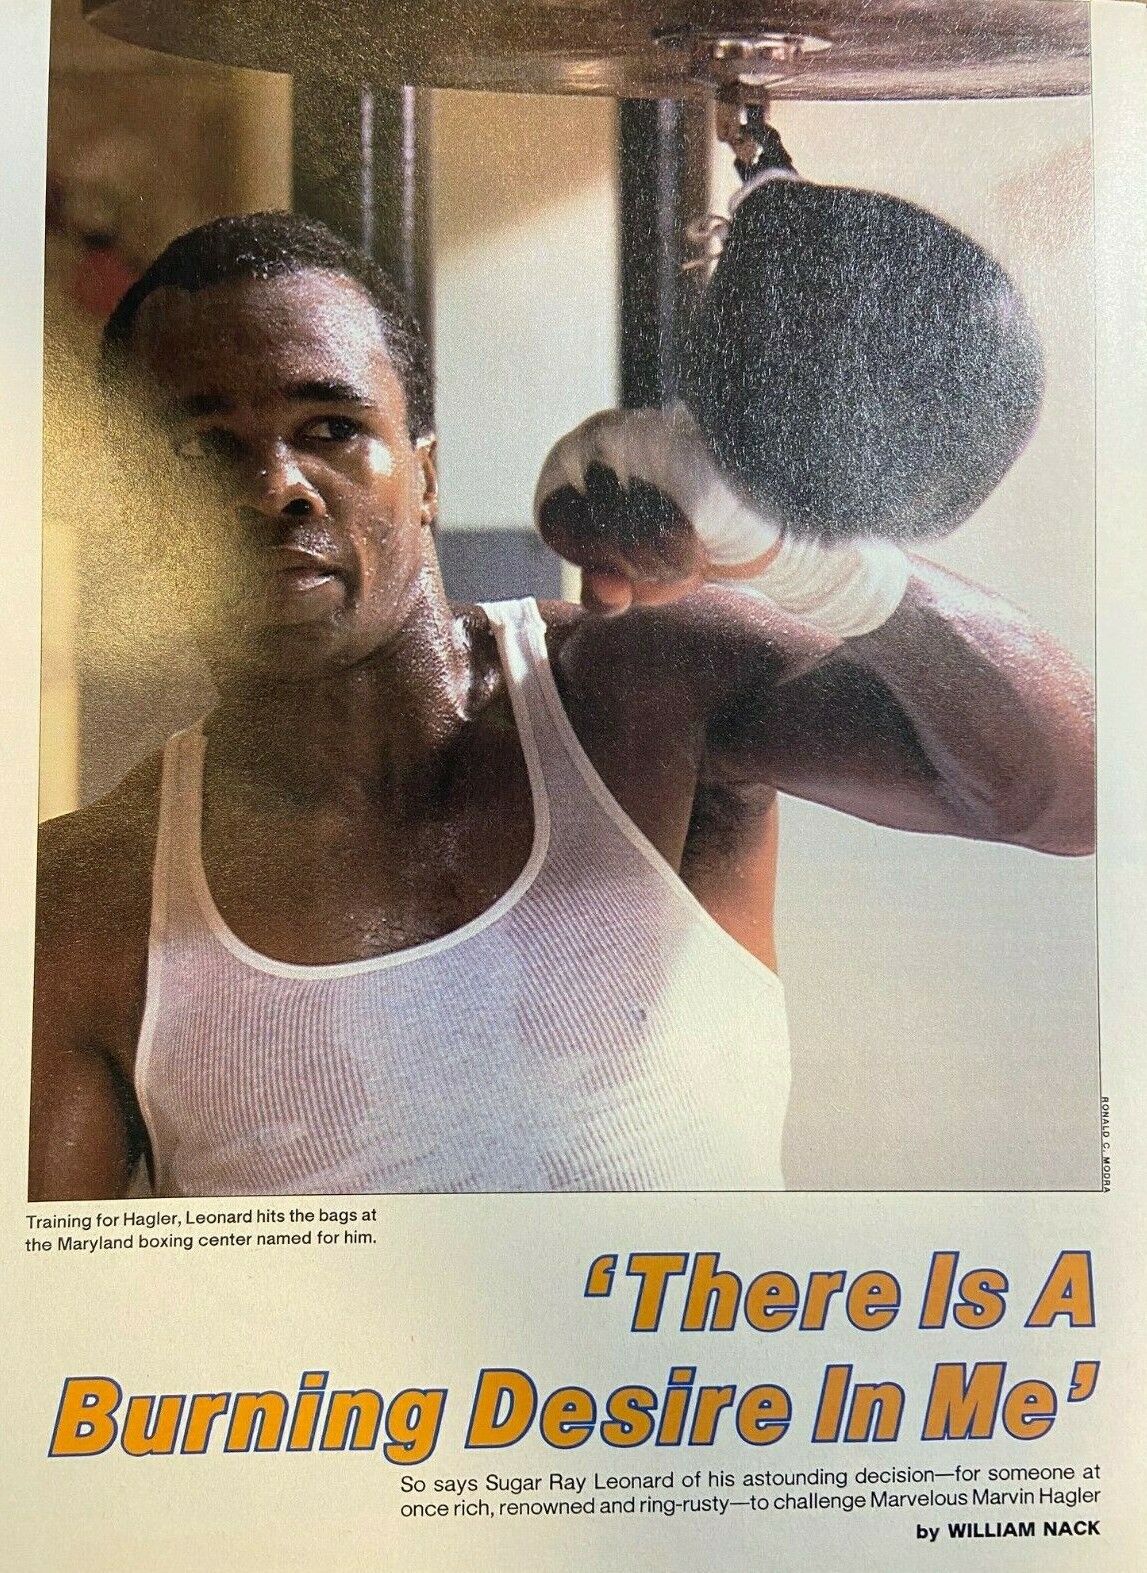 1986 Boxer Sugar Ray Leonard